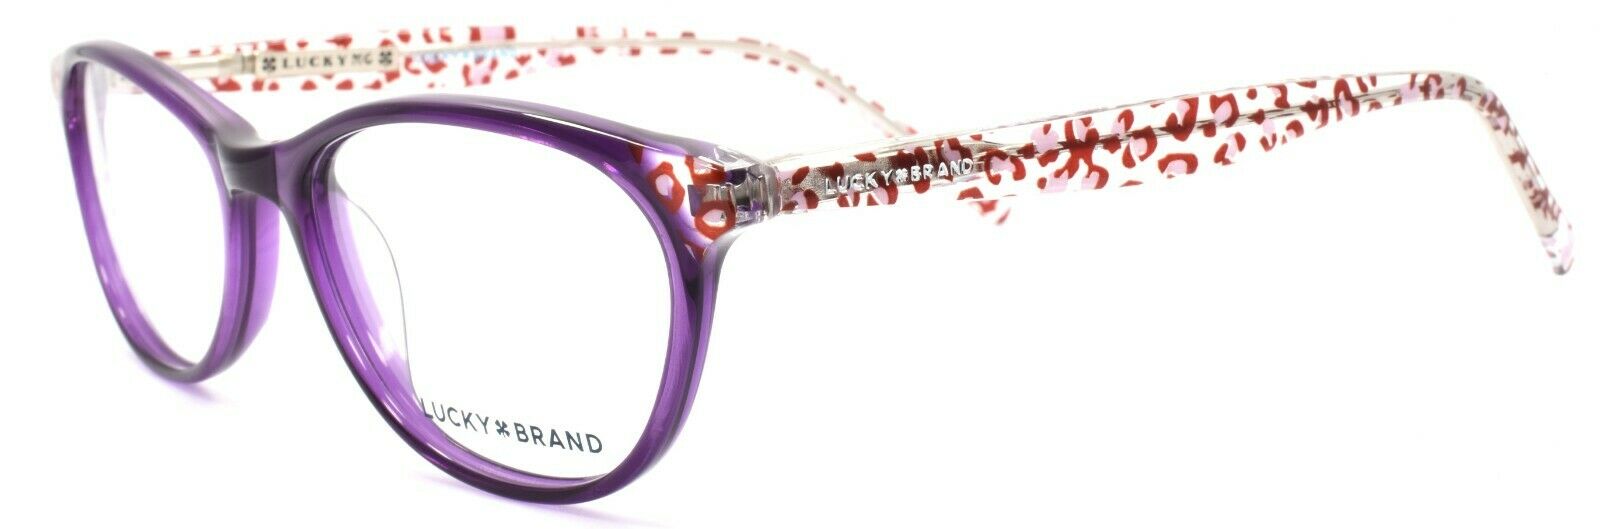 1-LUCKY BRAND D700 Women's Eyeglasses Frames 50-16-135 Purple + CASE-751286281989-IKSpecs